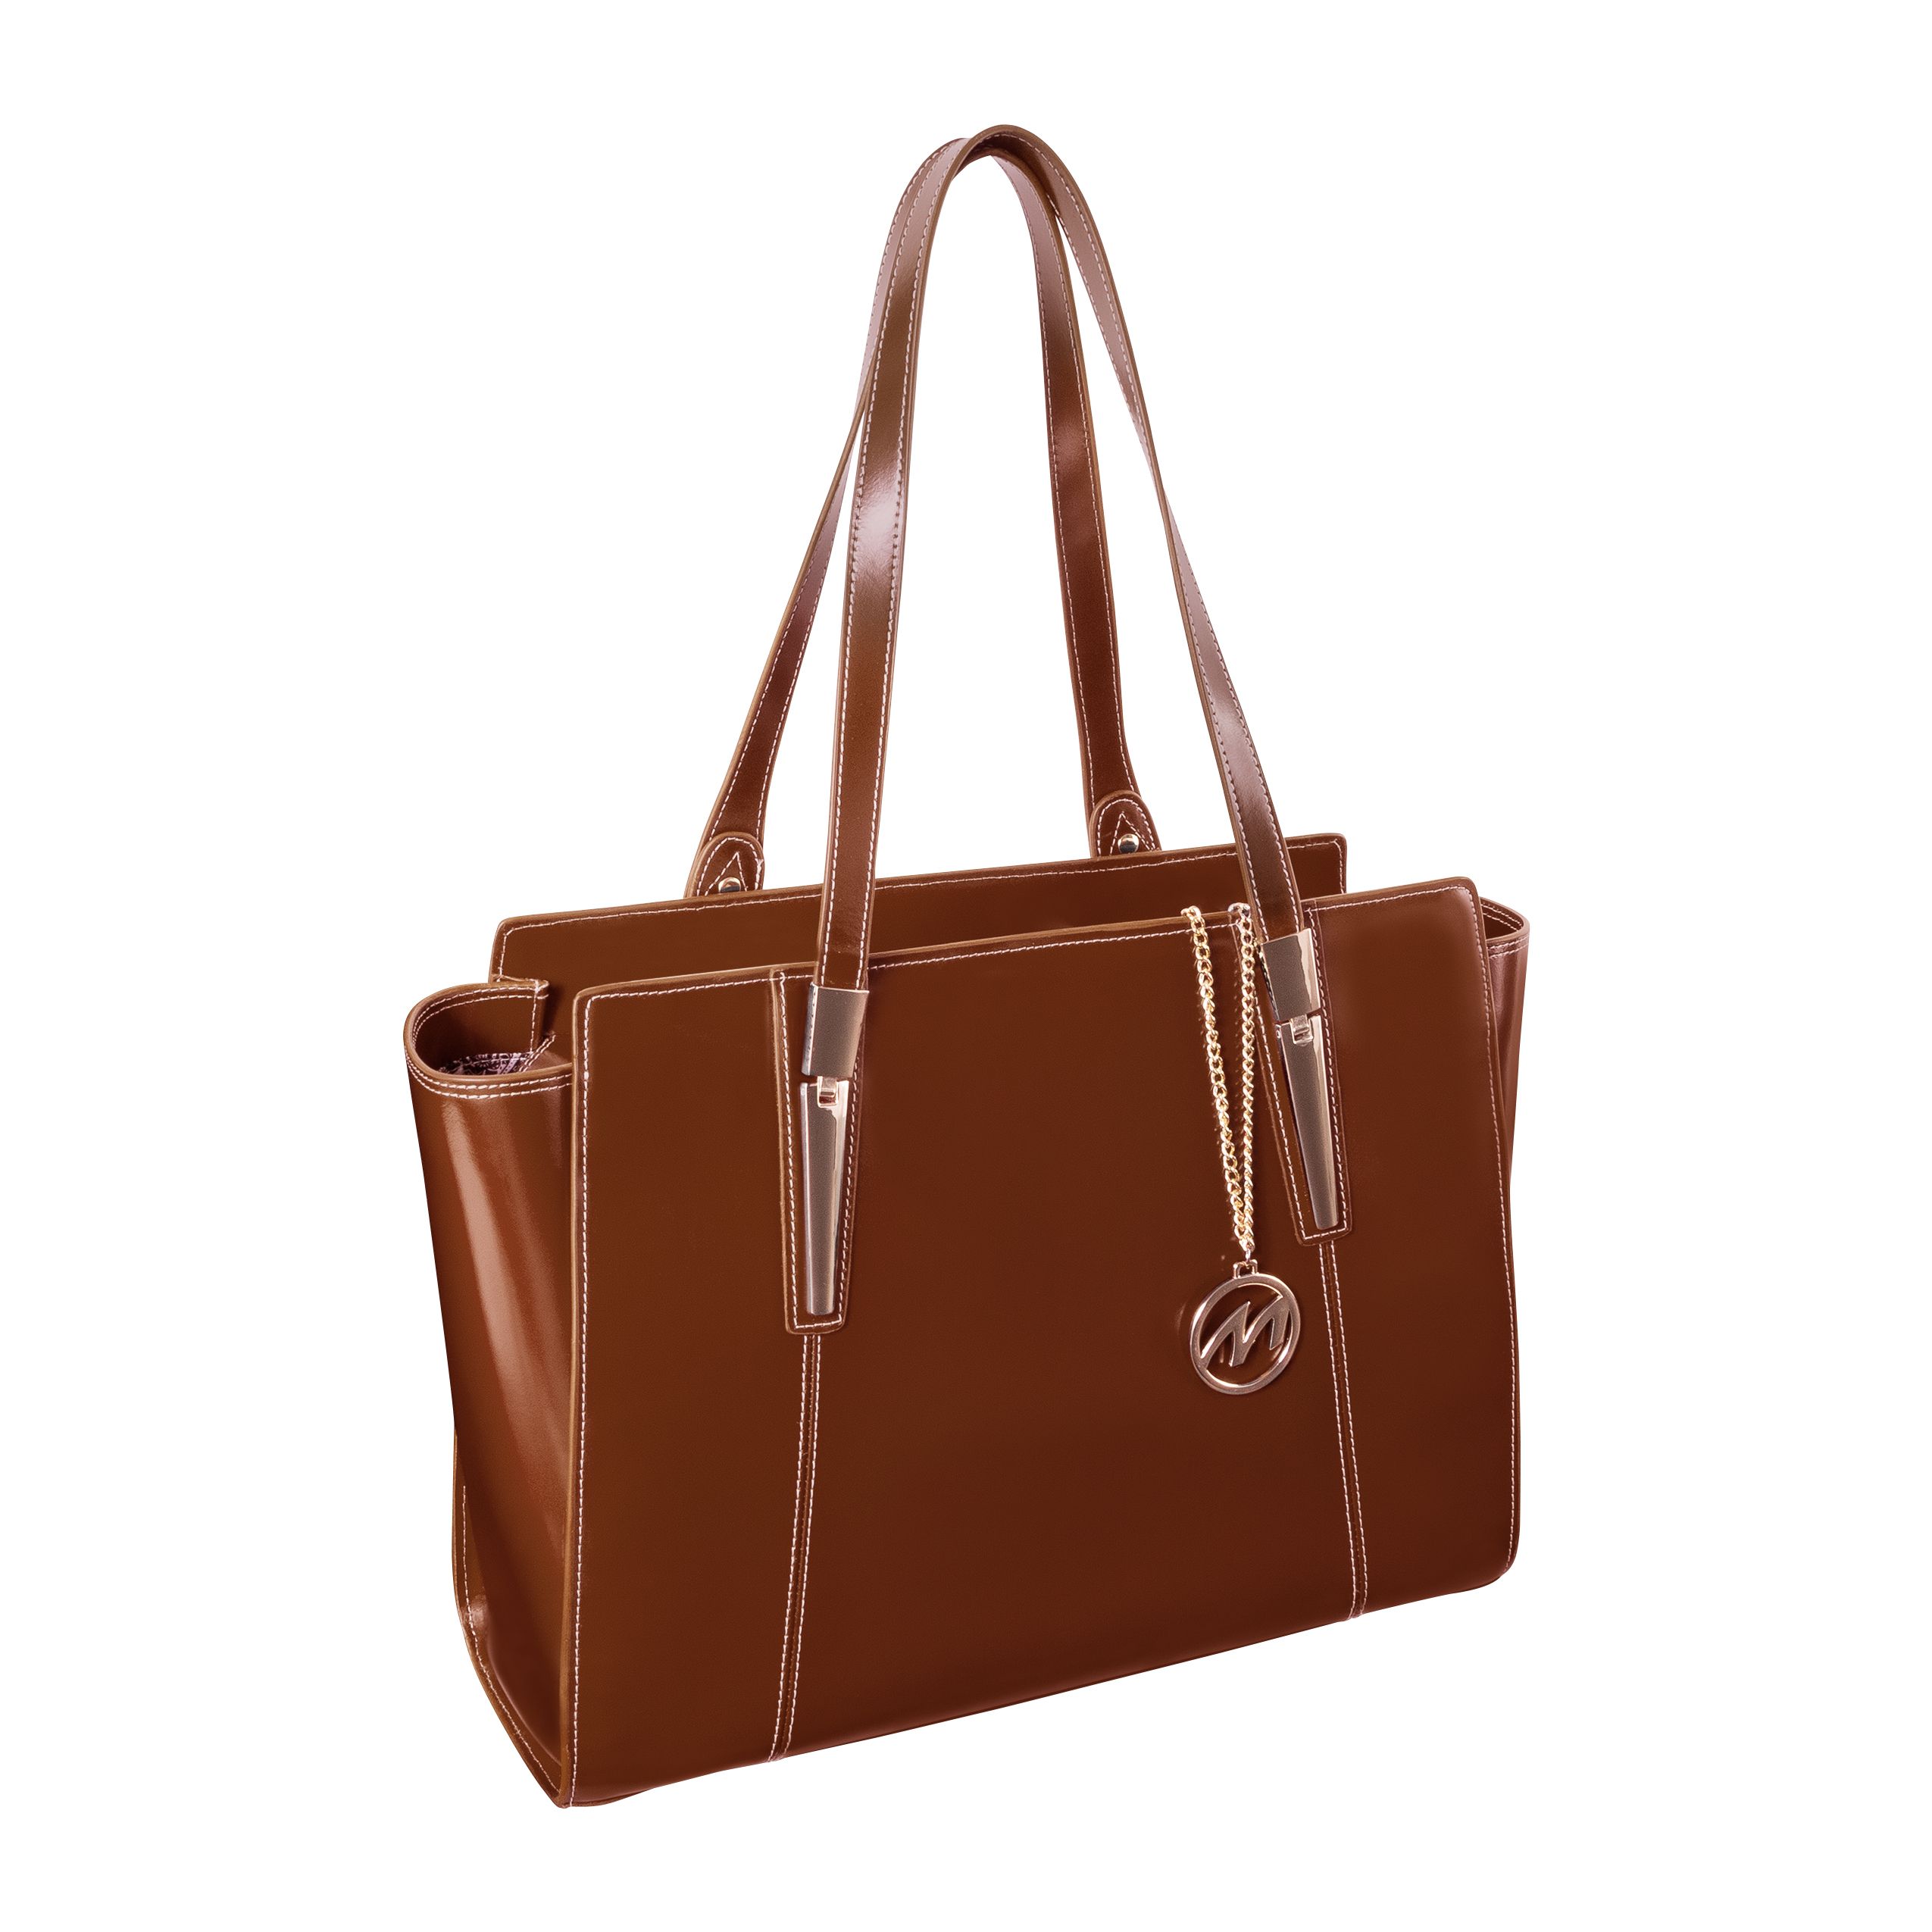 Aldora Leather Shoulder Tote Bag, Brown - 16 X 5.5 X 12 In.